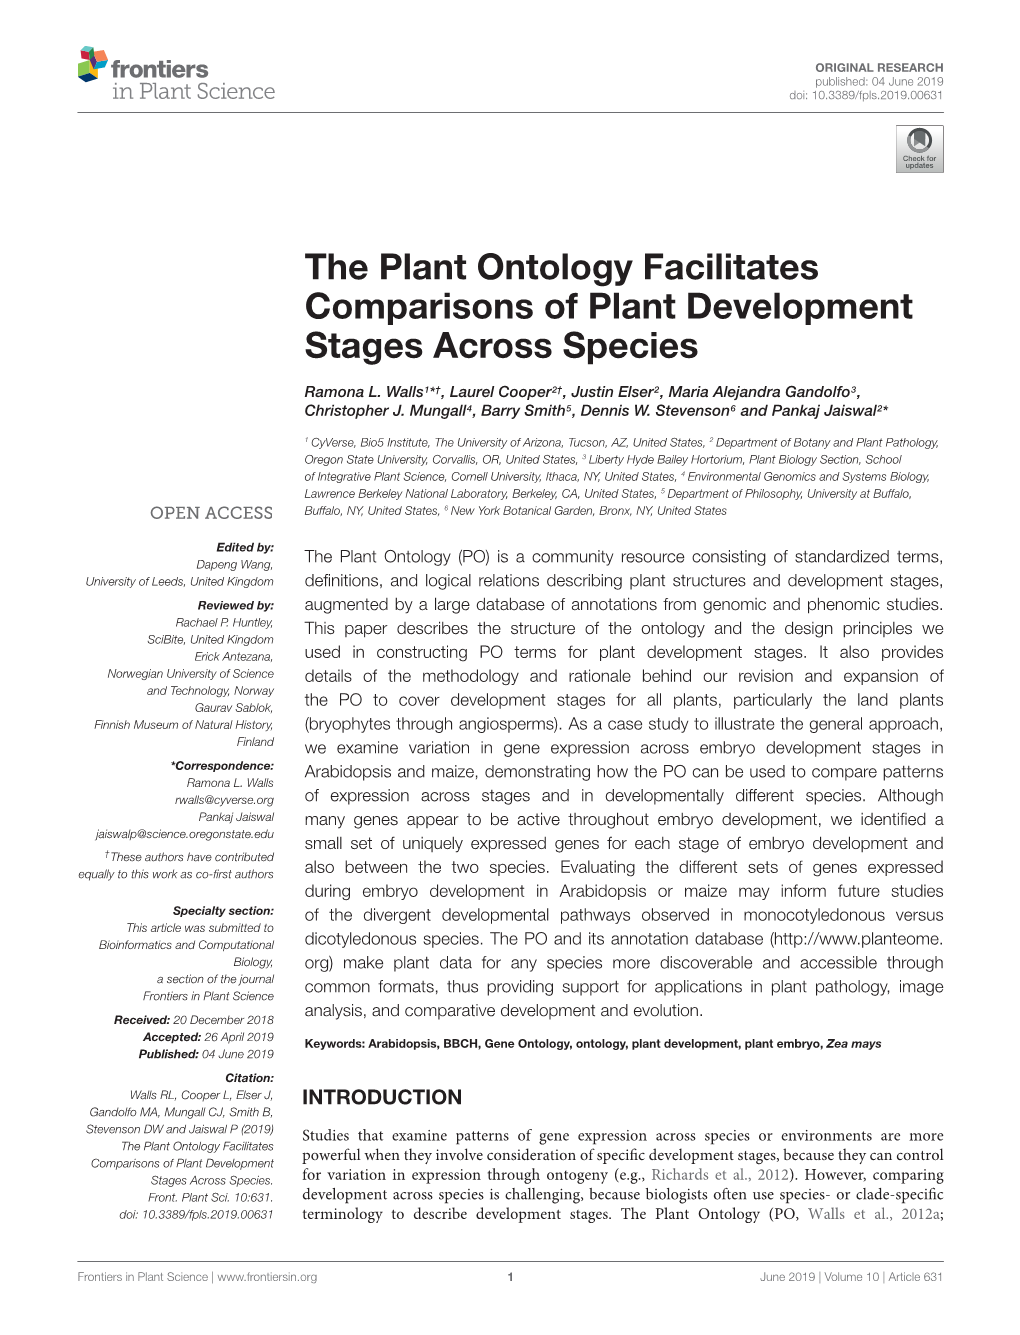 The Plant Ontology Facilitates Comparisons of Plant Development Stages Across Species